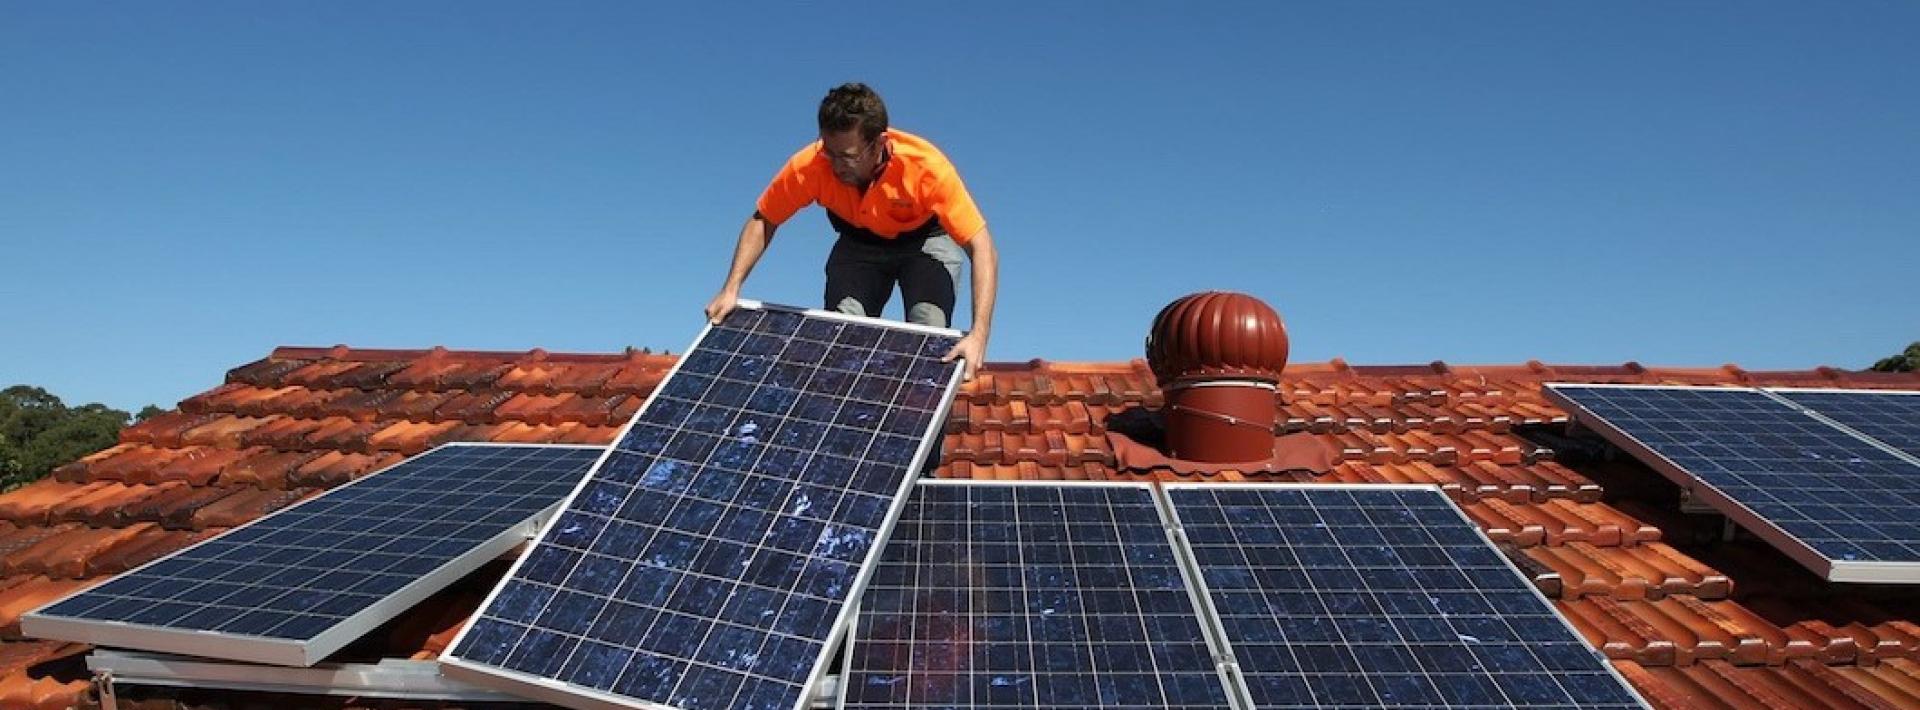 Holding back the sun: Thailand, solar energy and the “base load myth”